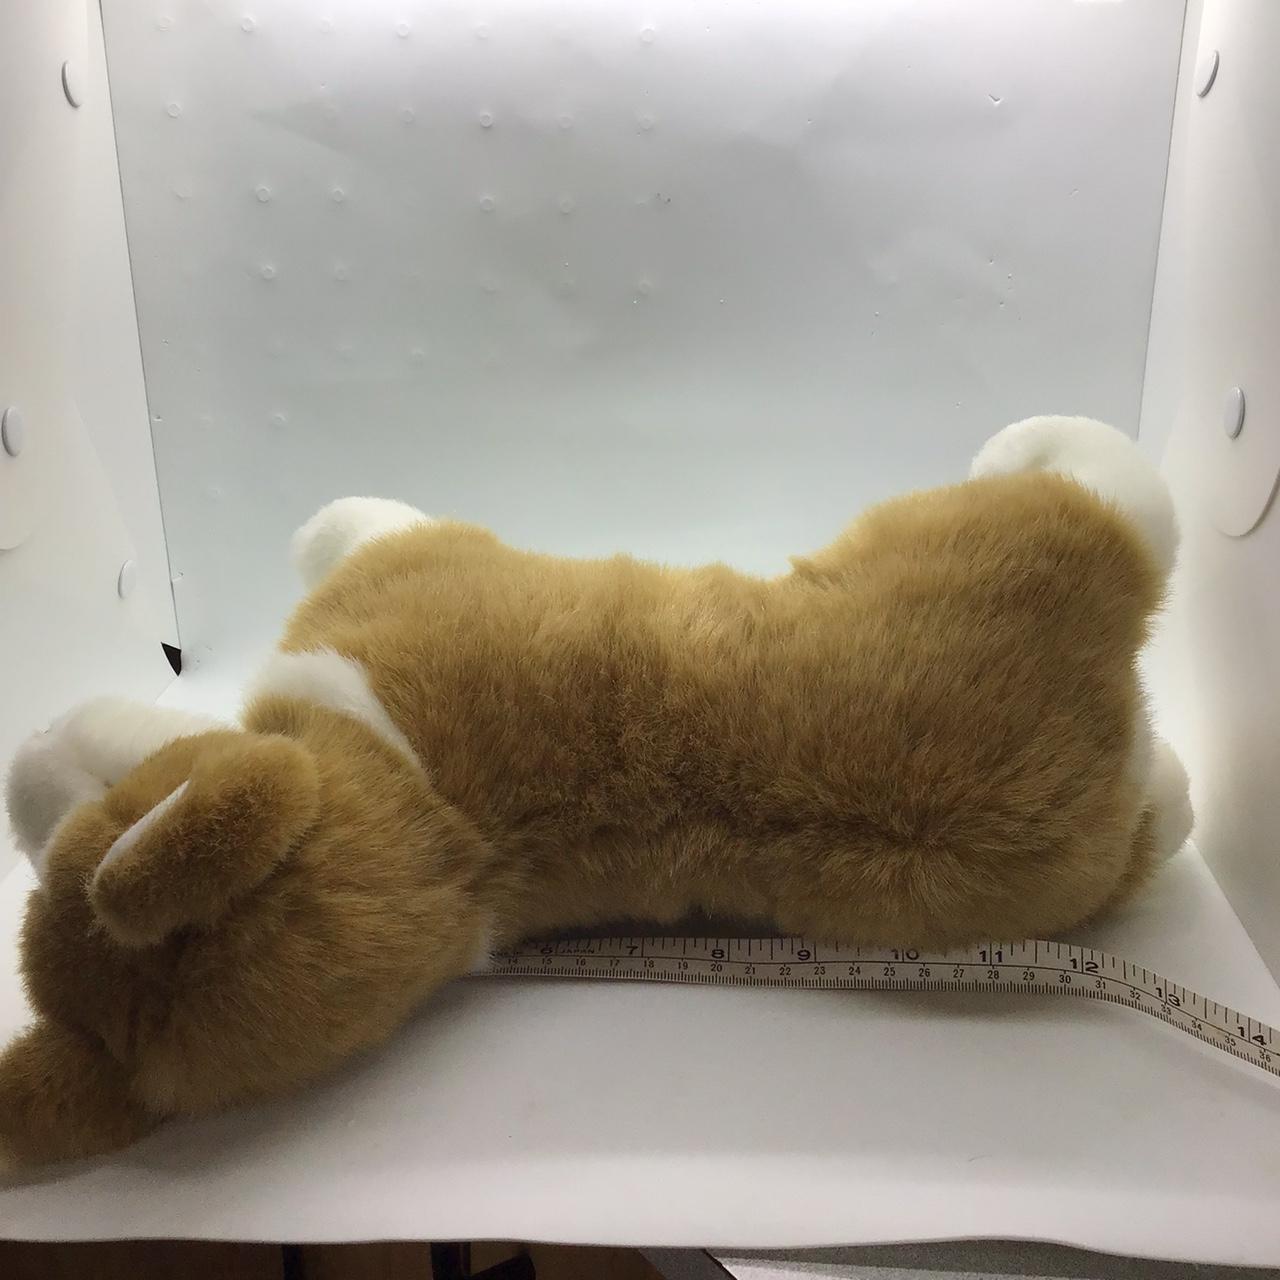 Douglas Louie Corgi Dog Plush Stuffed Animal